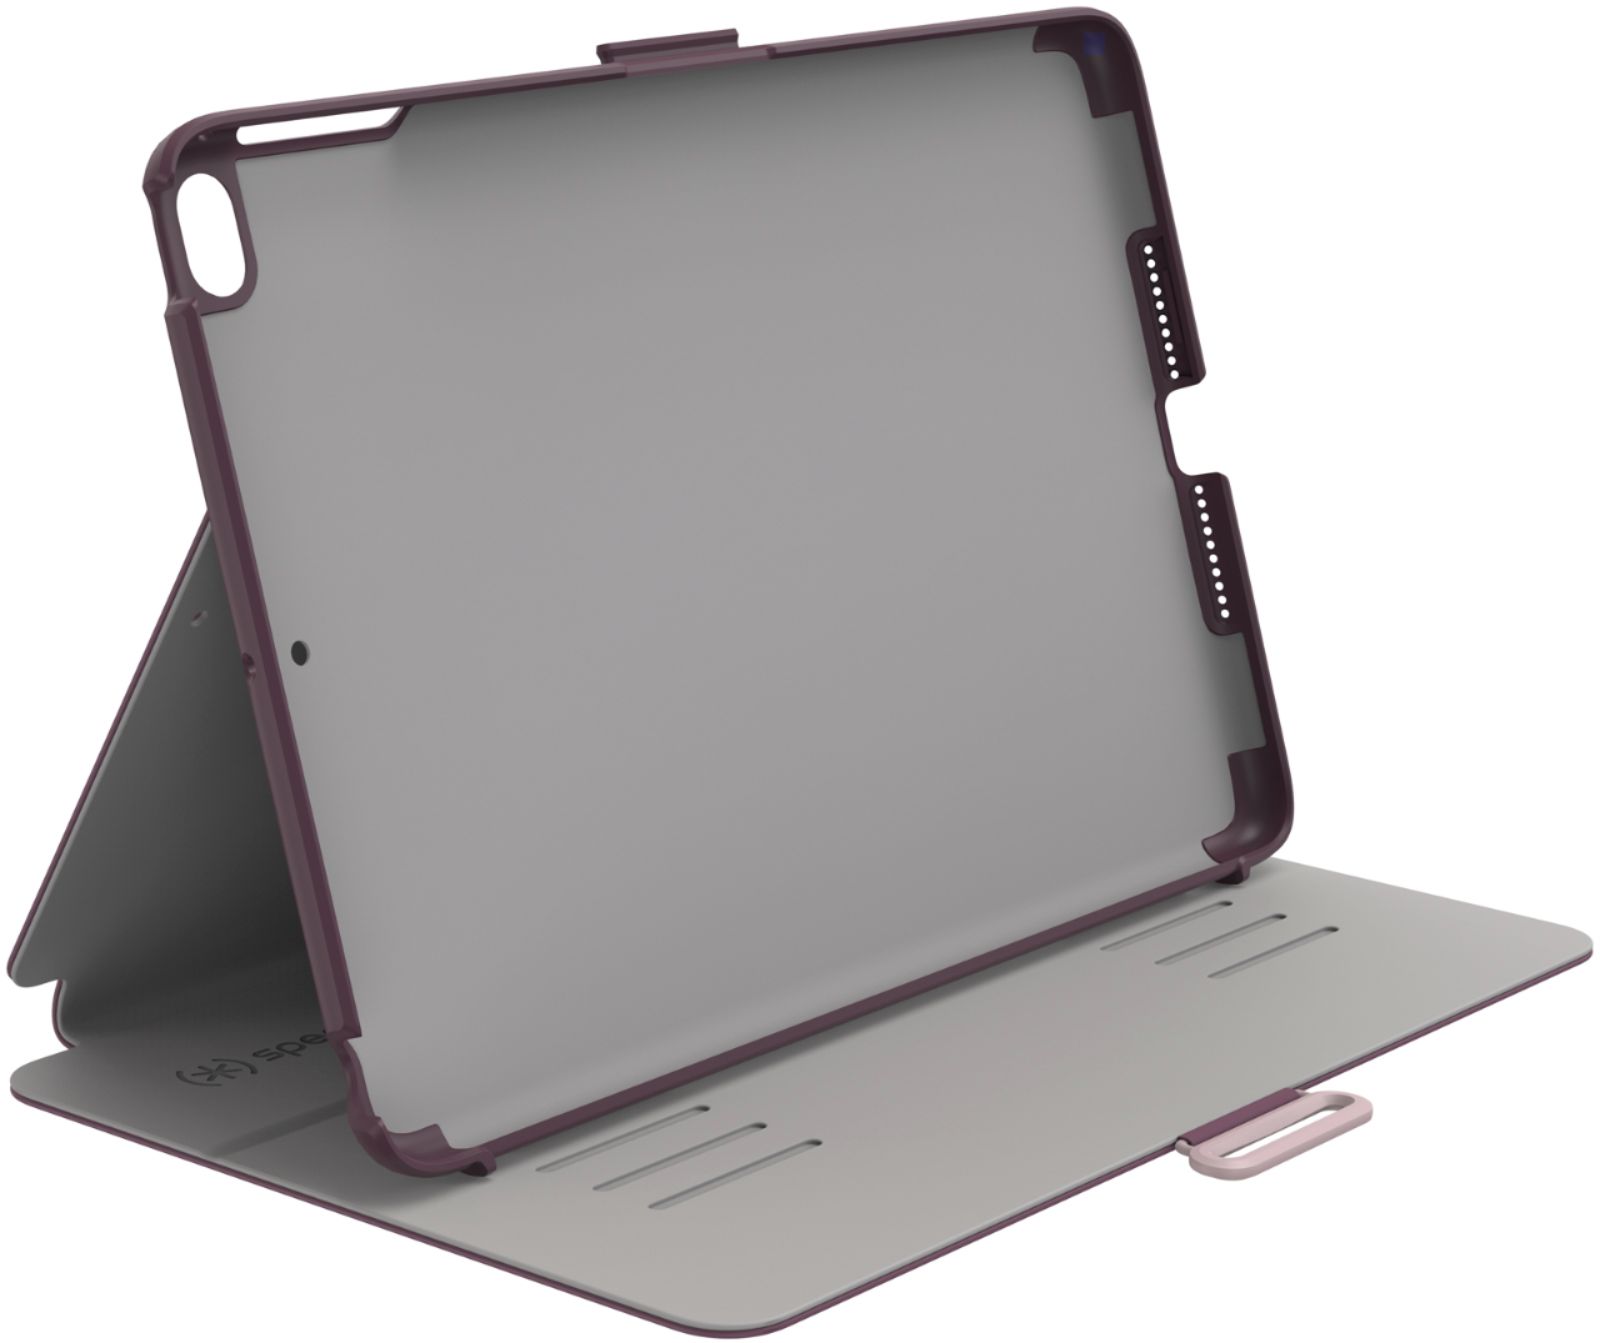 Speck Balance Folio iPad mini (5th generation) / iPad mini 4 Cases